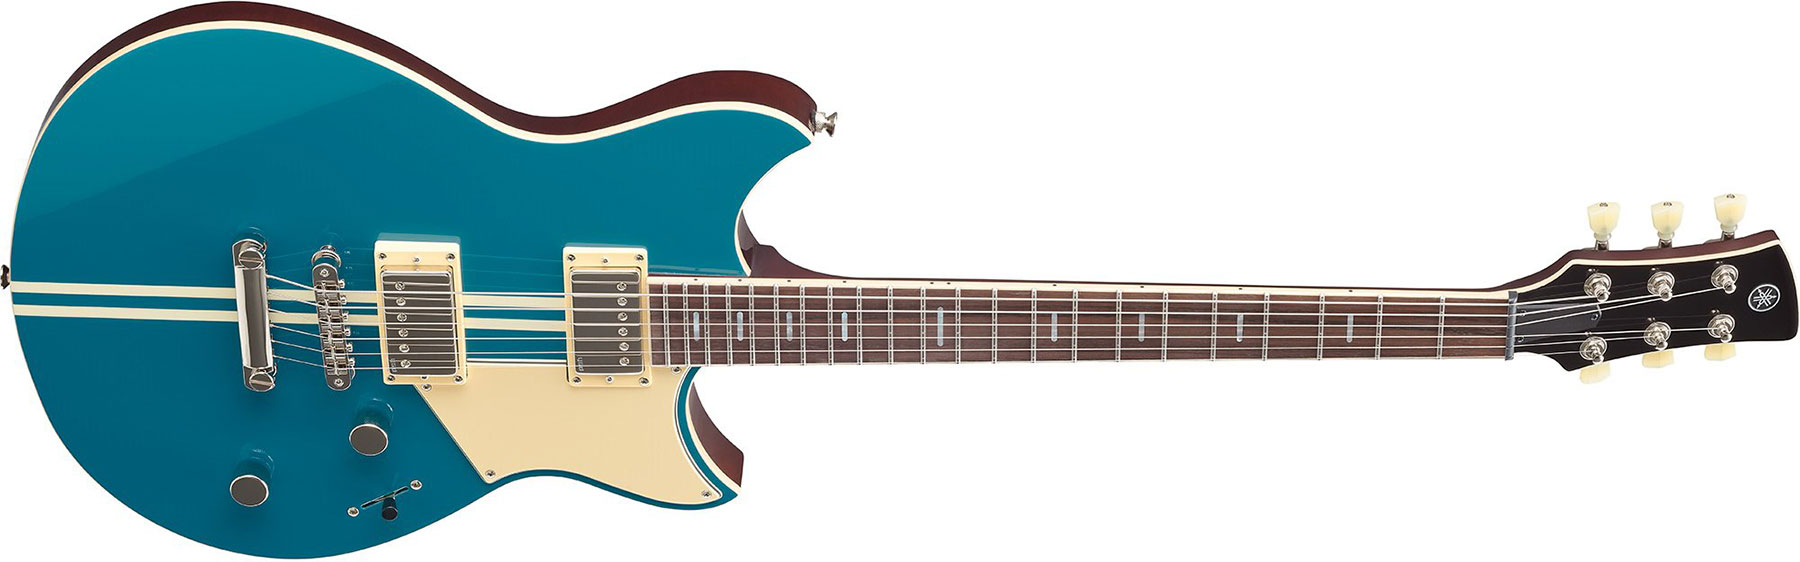 Yamaha Rss20 Revstar Standard Hh Ht Rw - Swift Blue - Double Cut E-Gitarre - Variation 1